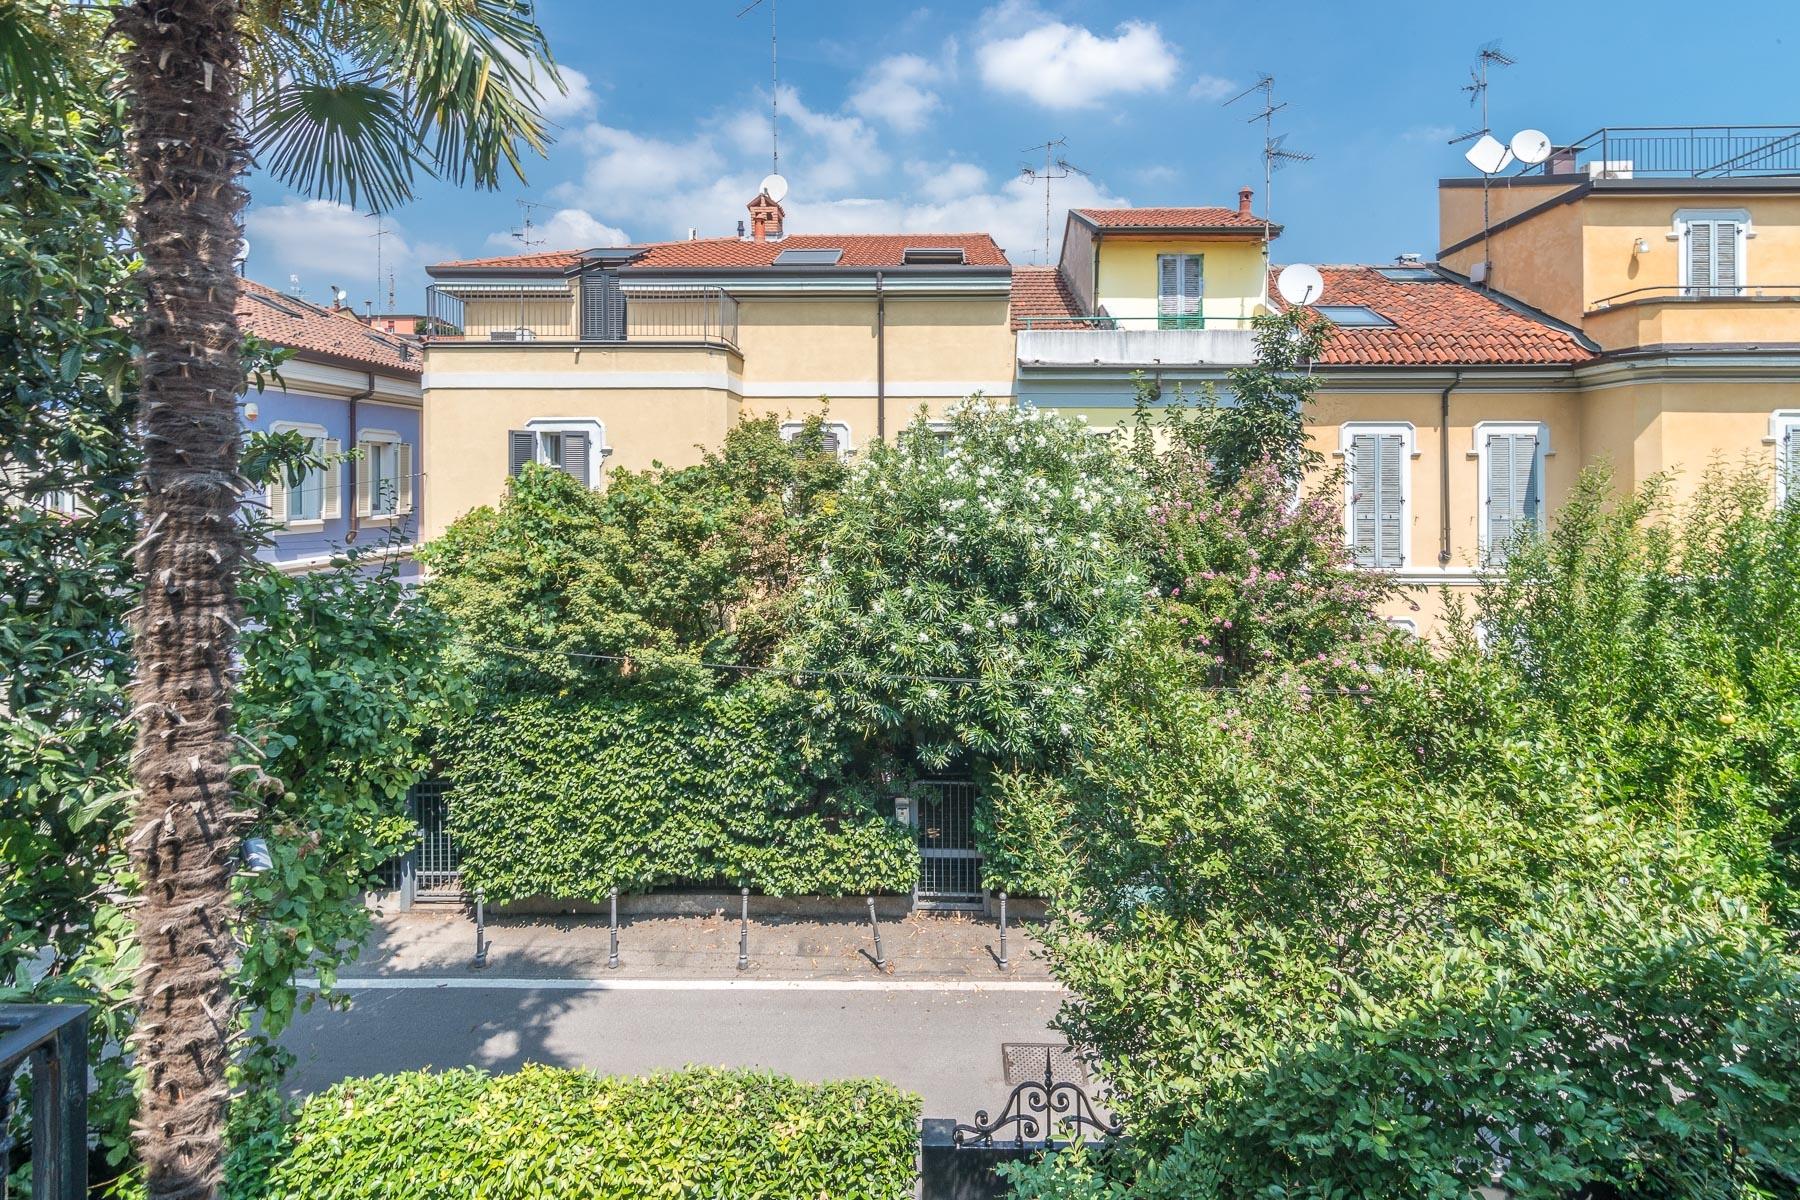 Maison indépendante avec jardin au coeur de Milan - 21